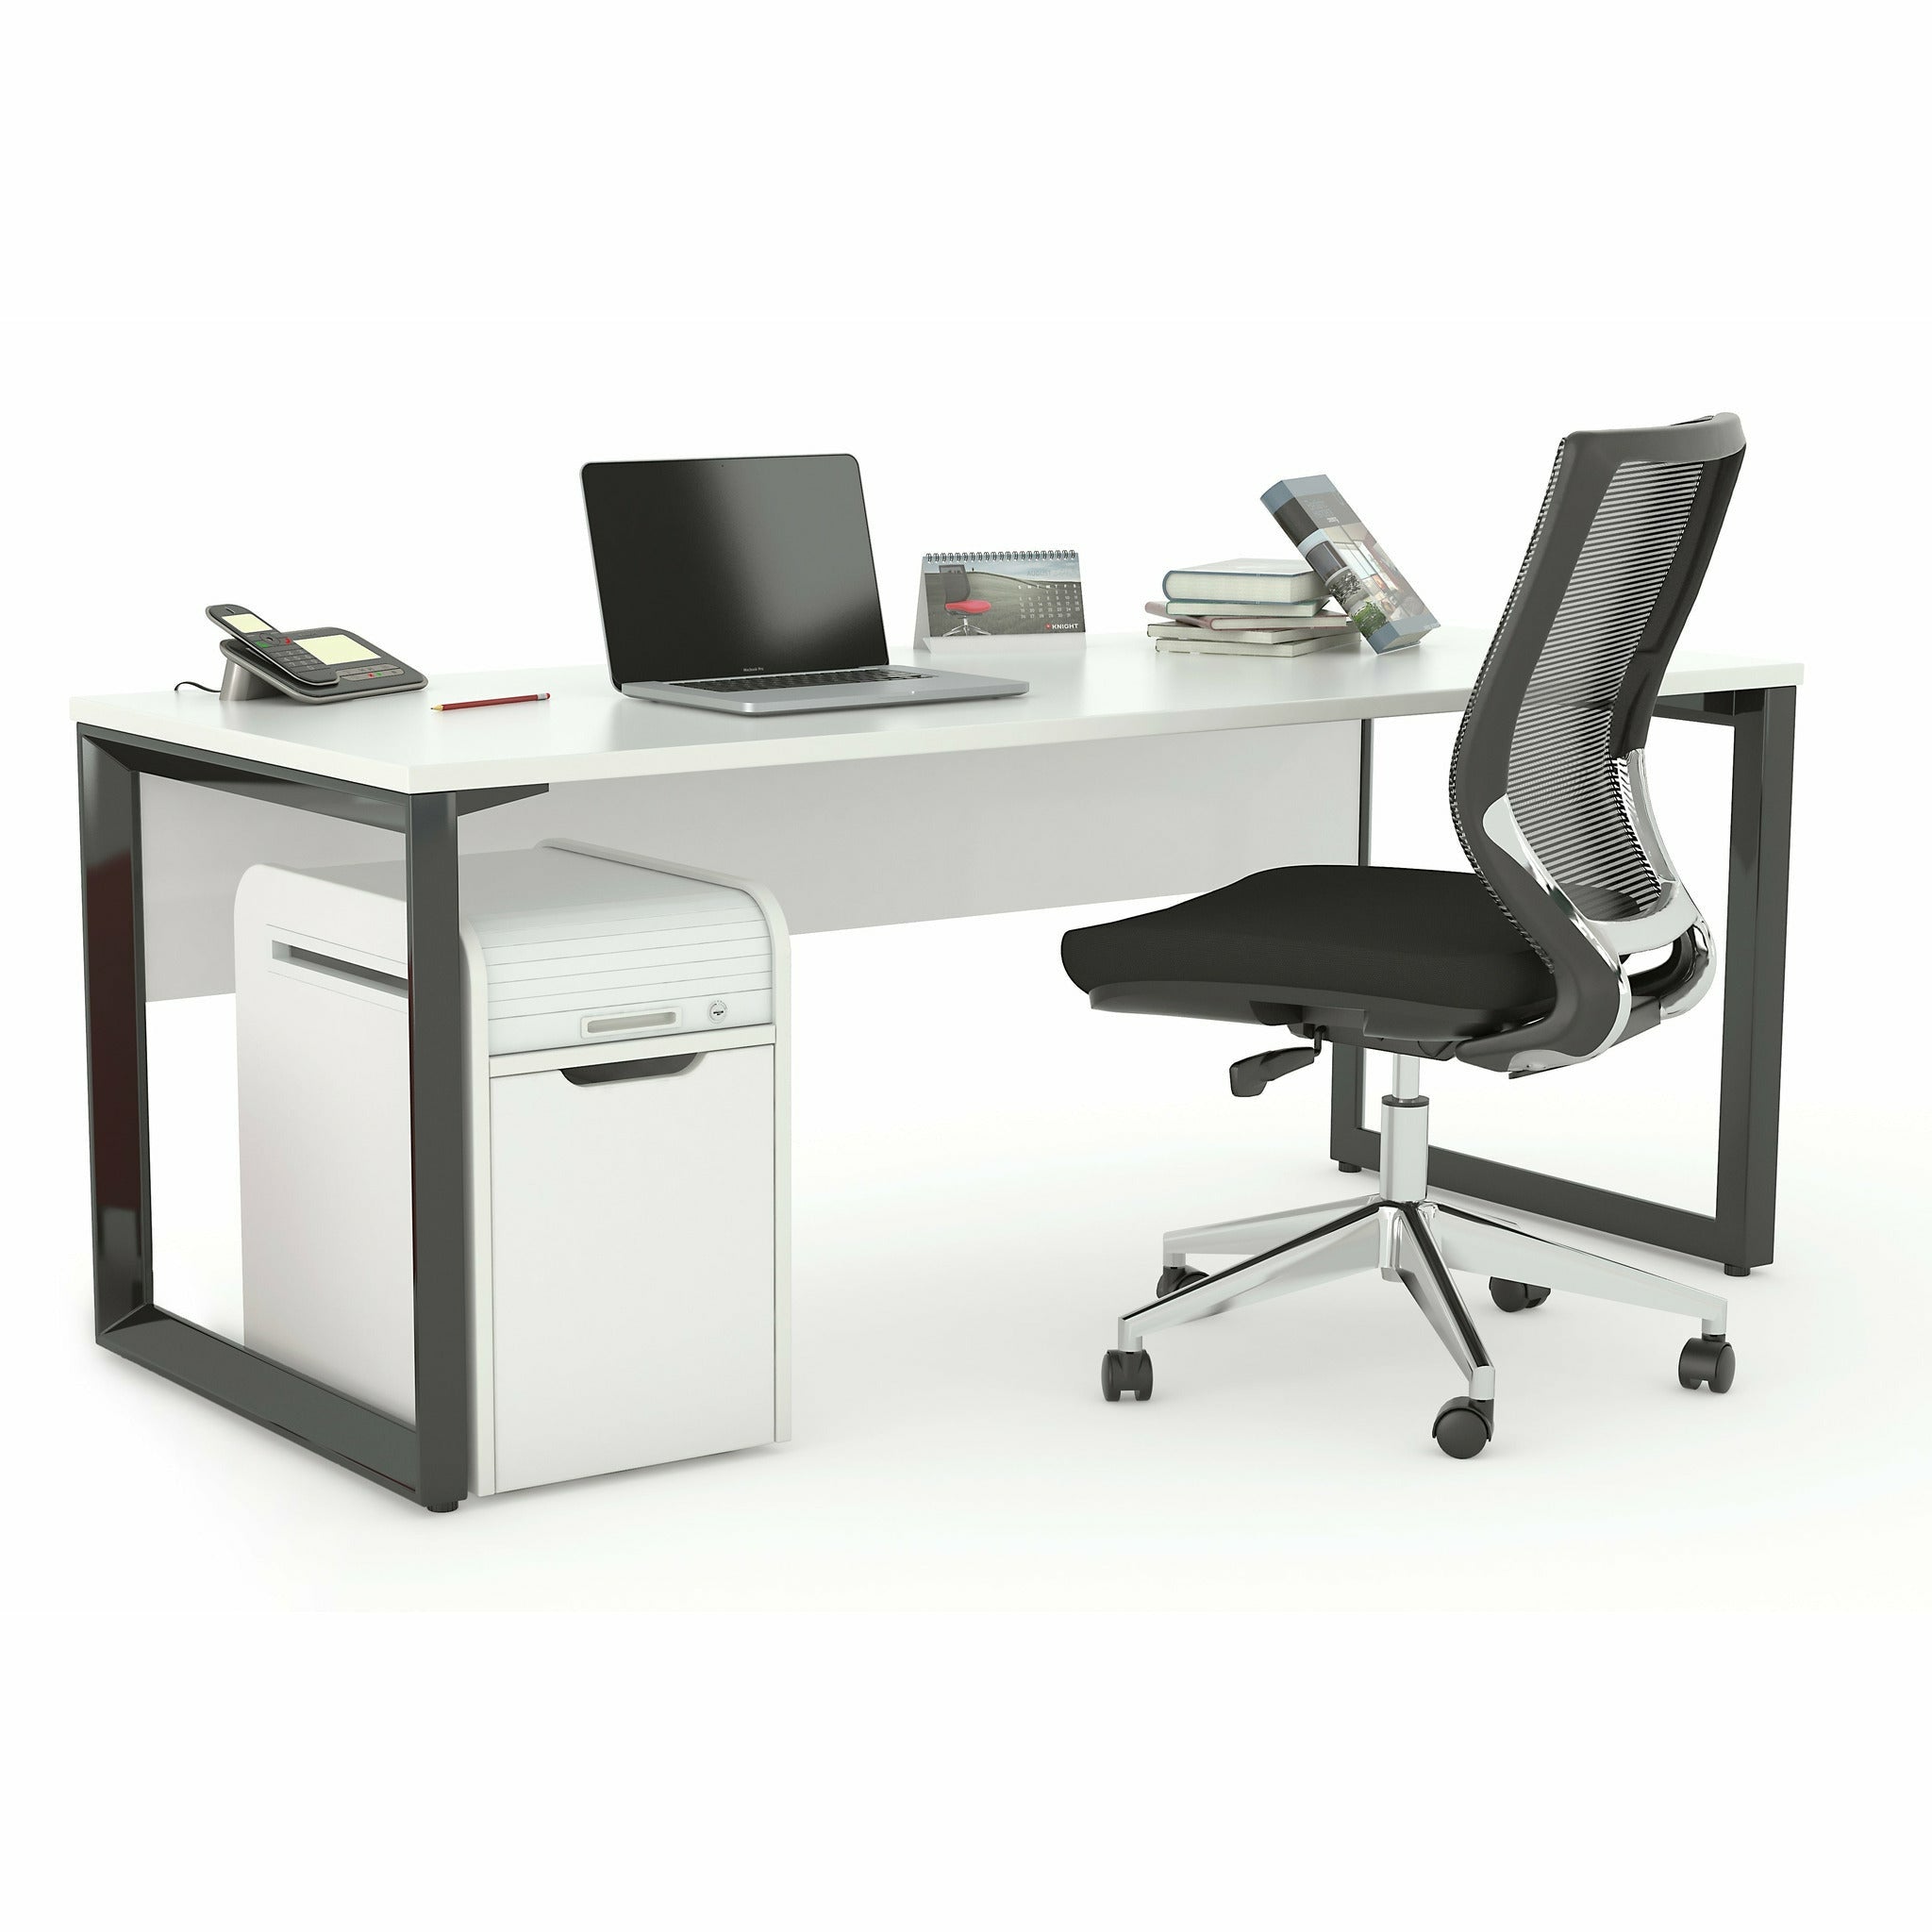 Anvil Straightline Singlesided Desk System